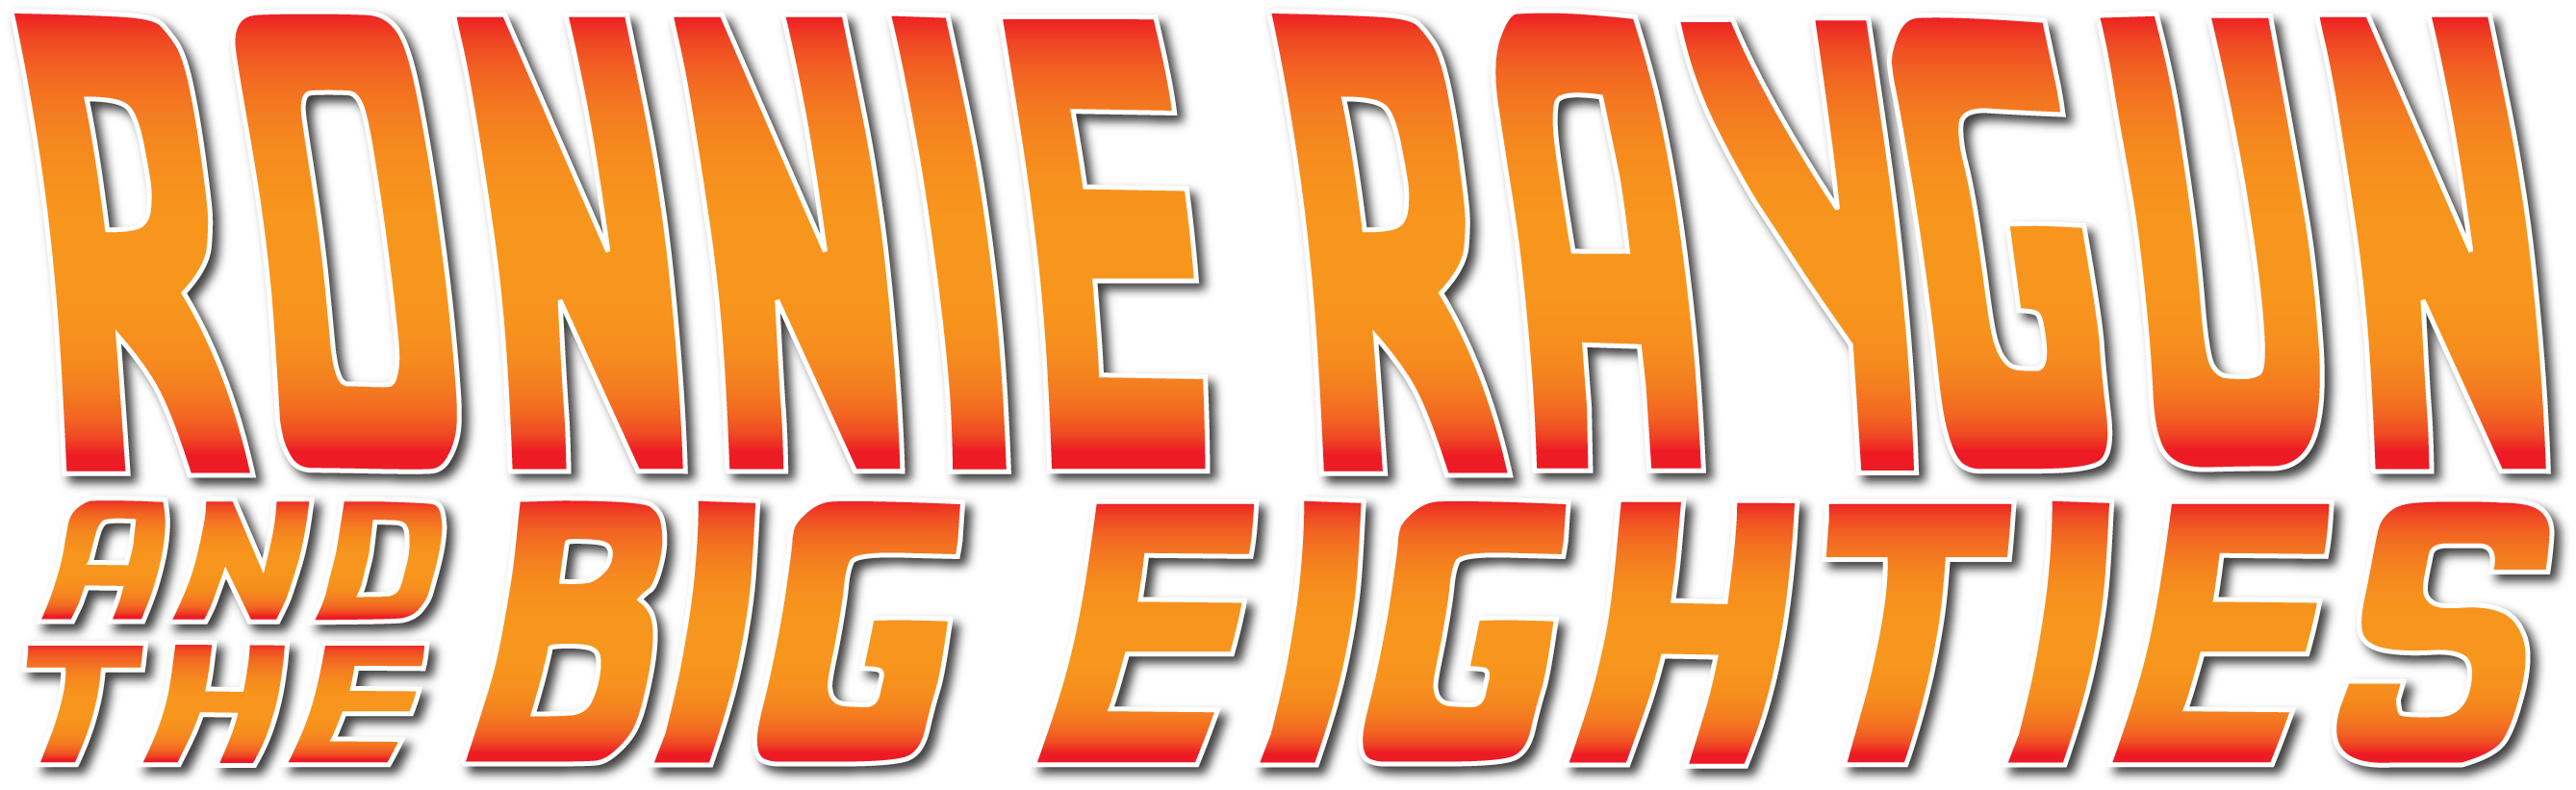 RR Logo